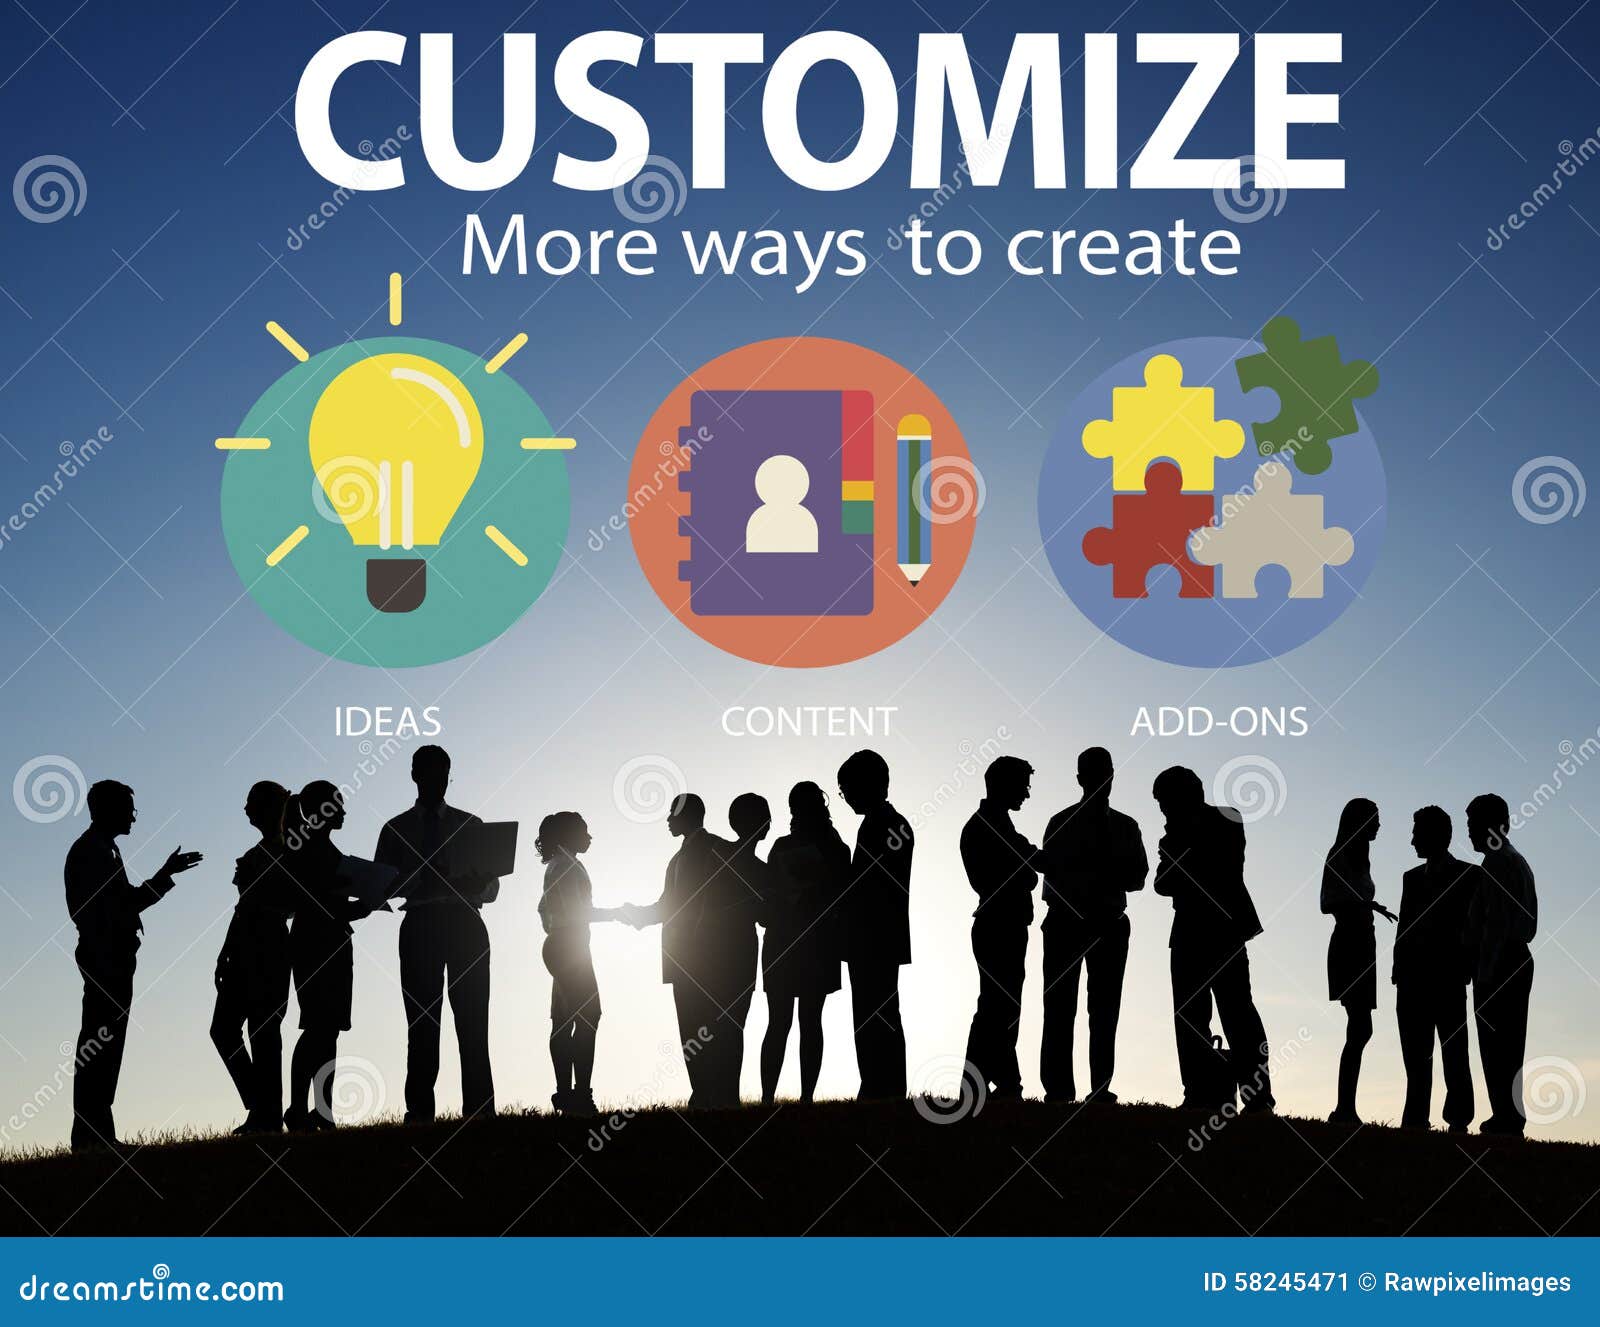 customize ideas identity individuality innovation personalize co